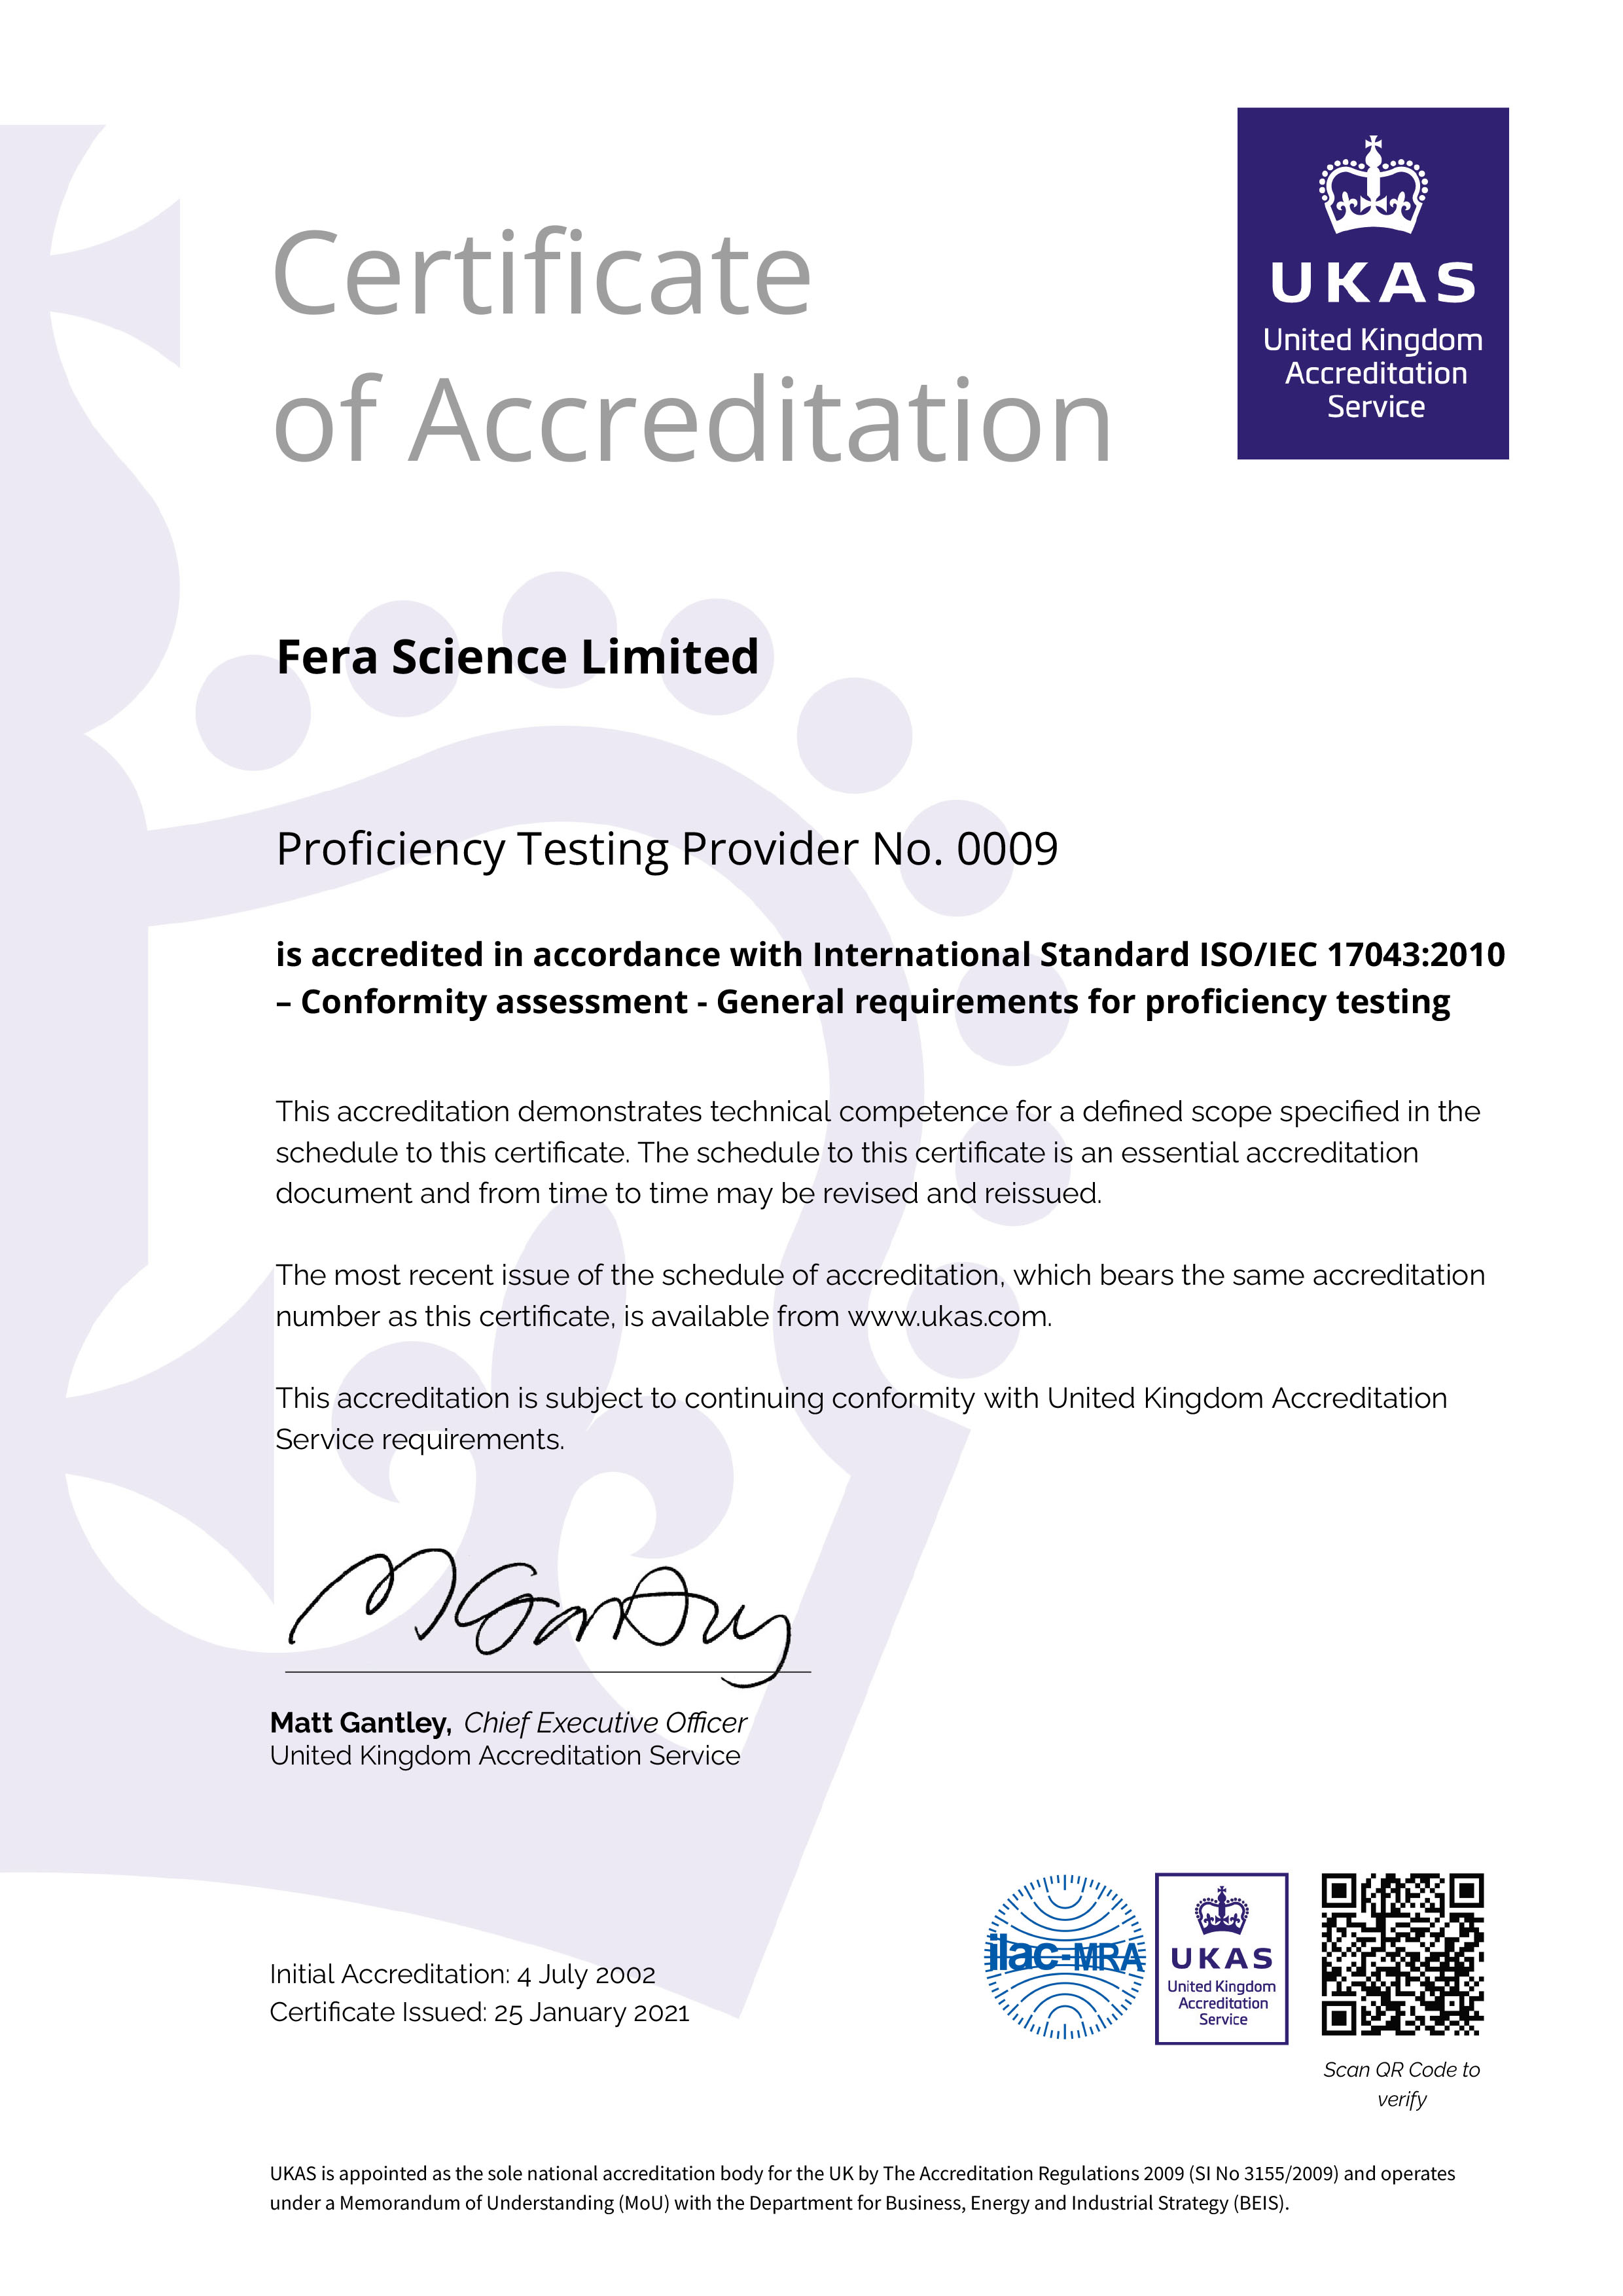 Fera - Proficiency Testing certificate